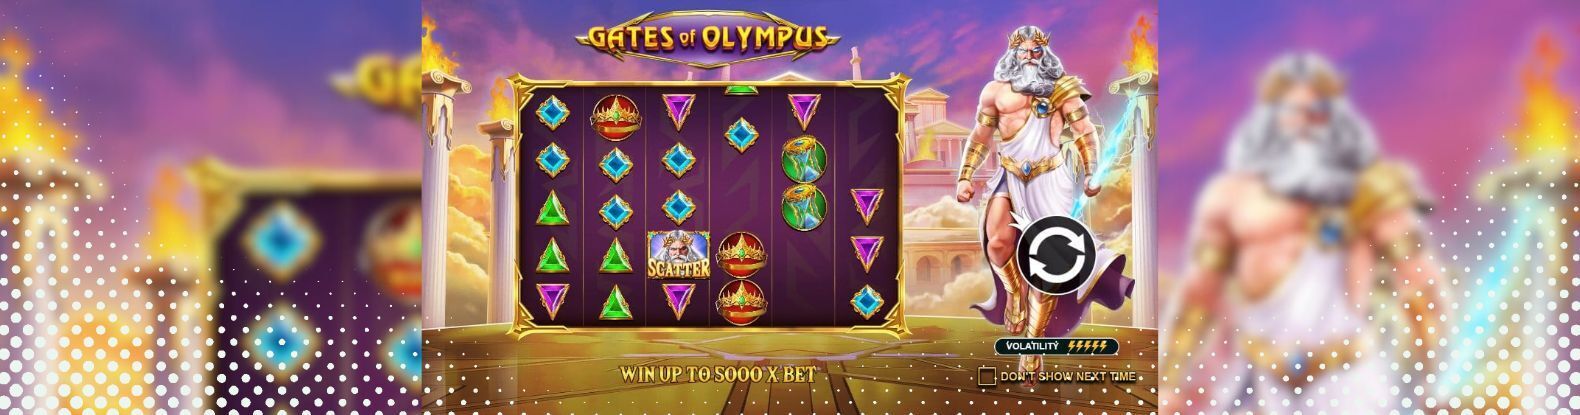 This is a screenshot of Gates of Olympus Pokies Game by Pragmatic Play